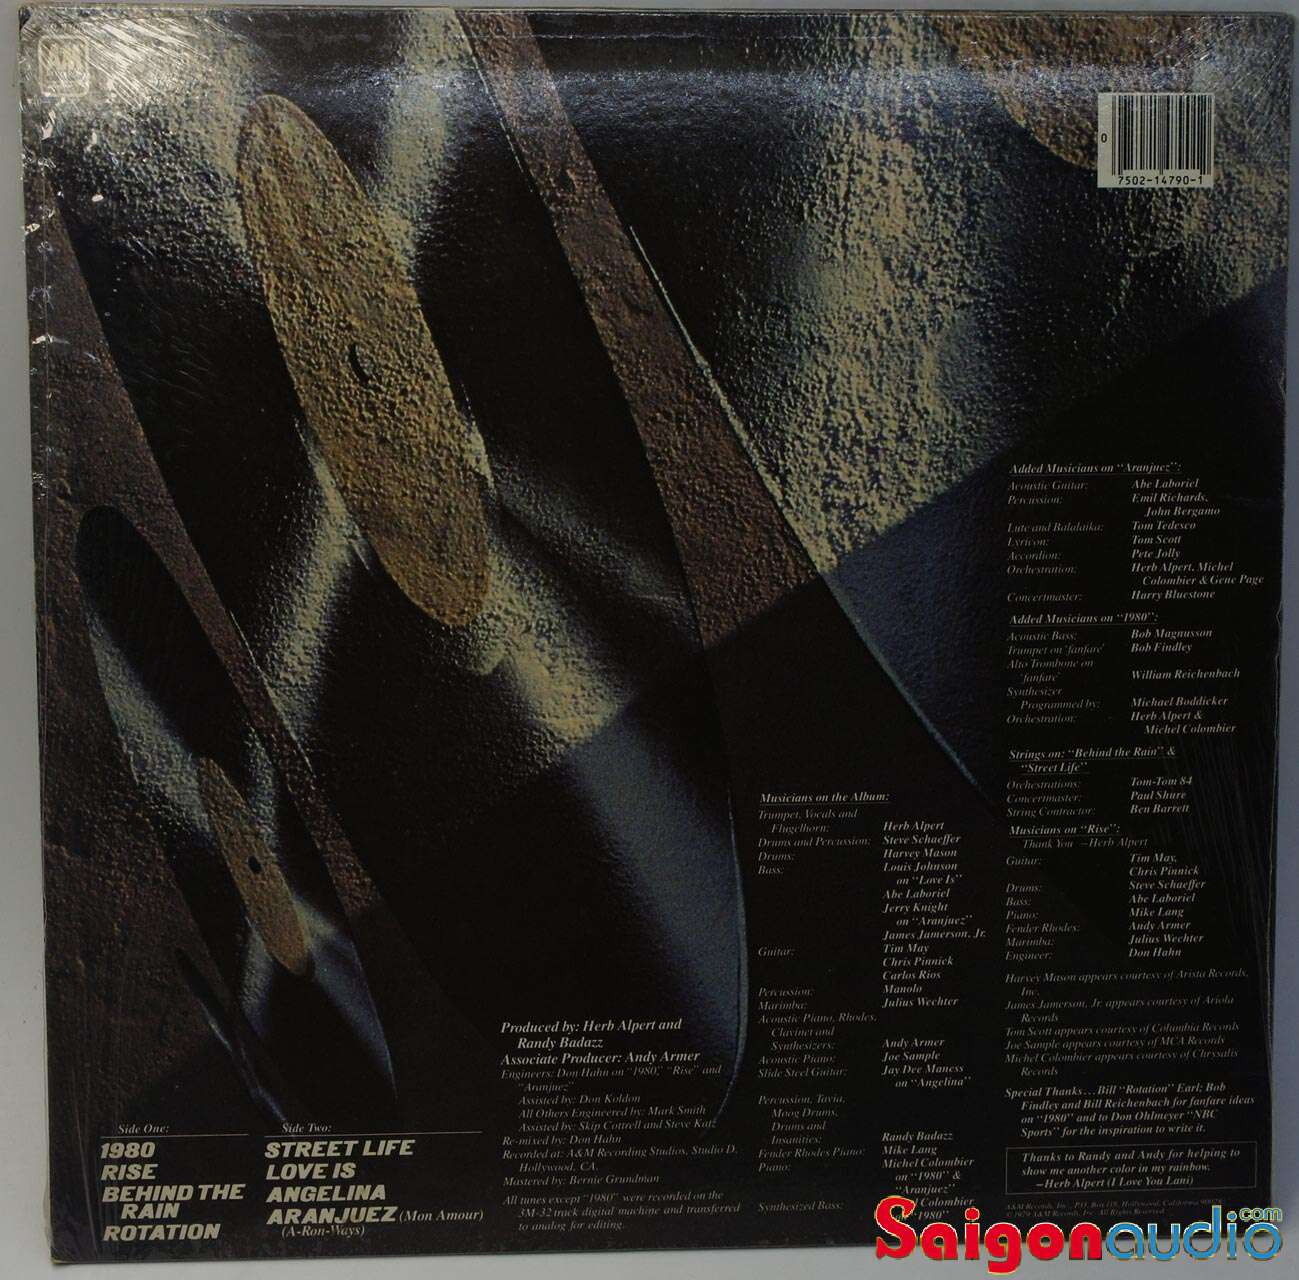 Đĩa than LP Herb Alpert - Rise (1979)